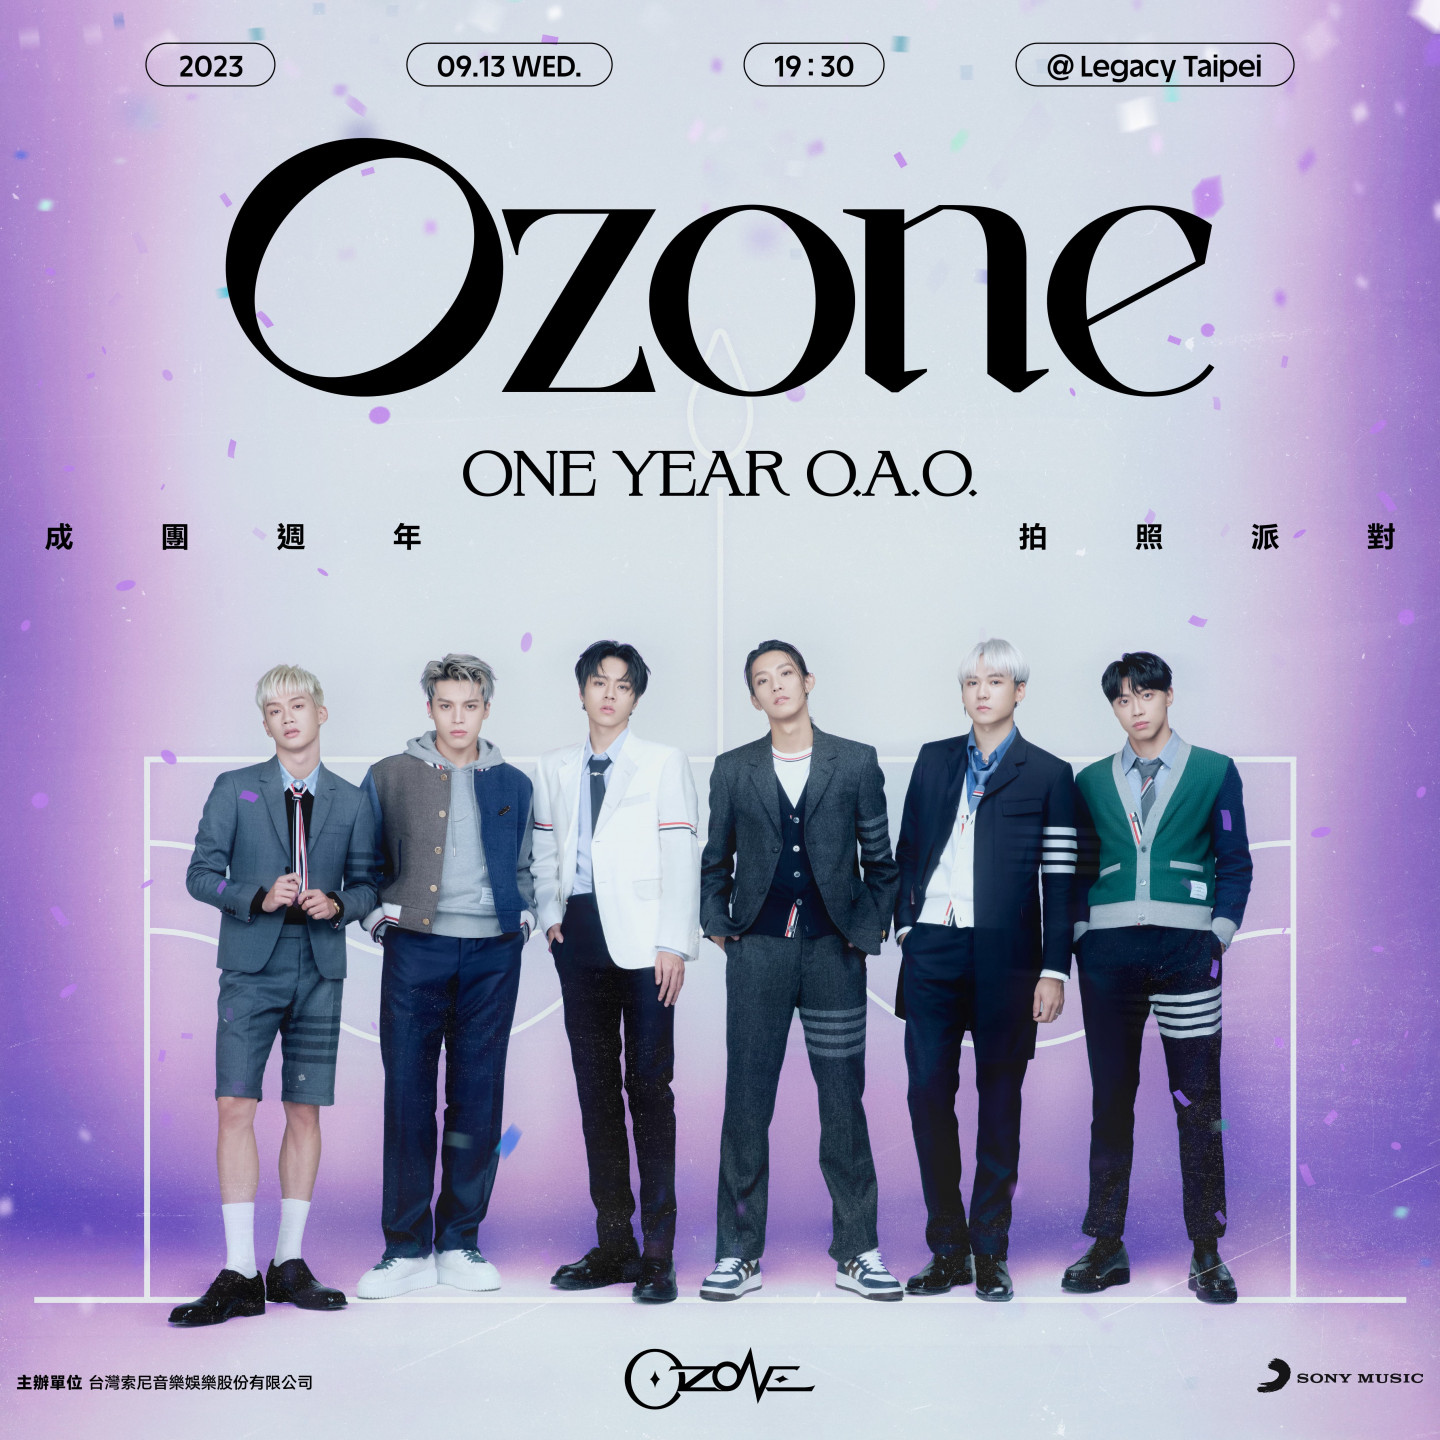 Ozone_One Year O.A.O._Poster(1200x1200)